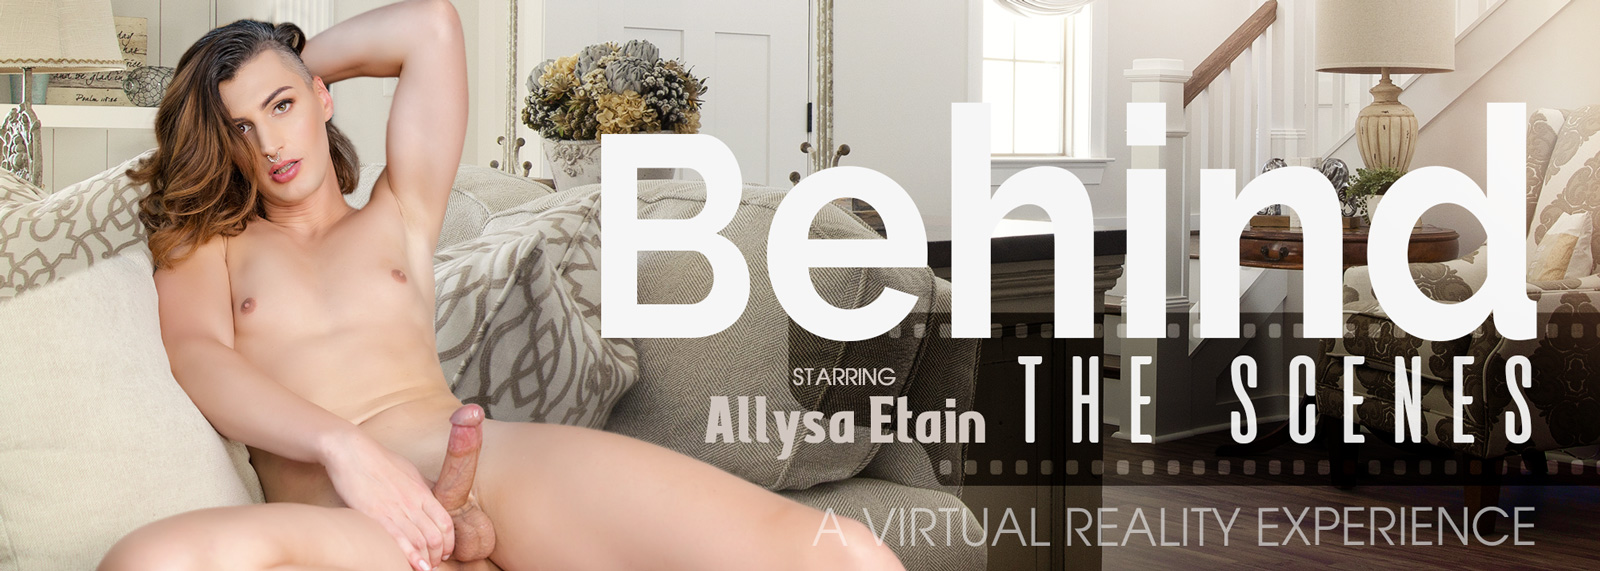 Behind the Scenes - VR Porn Video, Starring: Allysa Etain VR